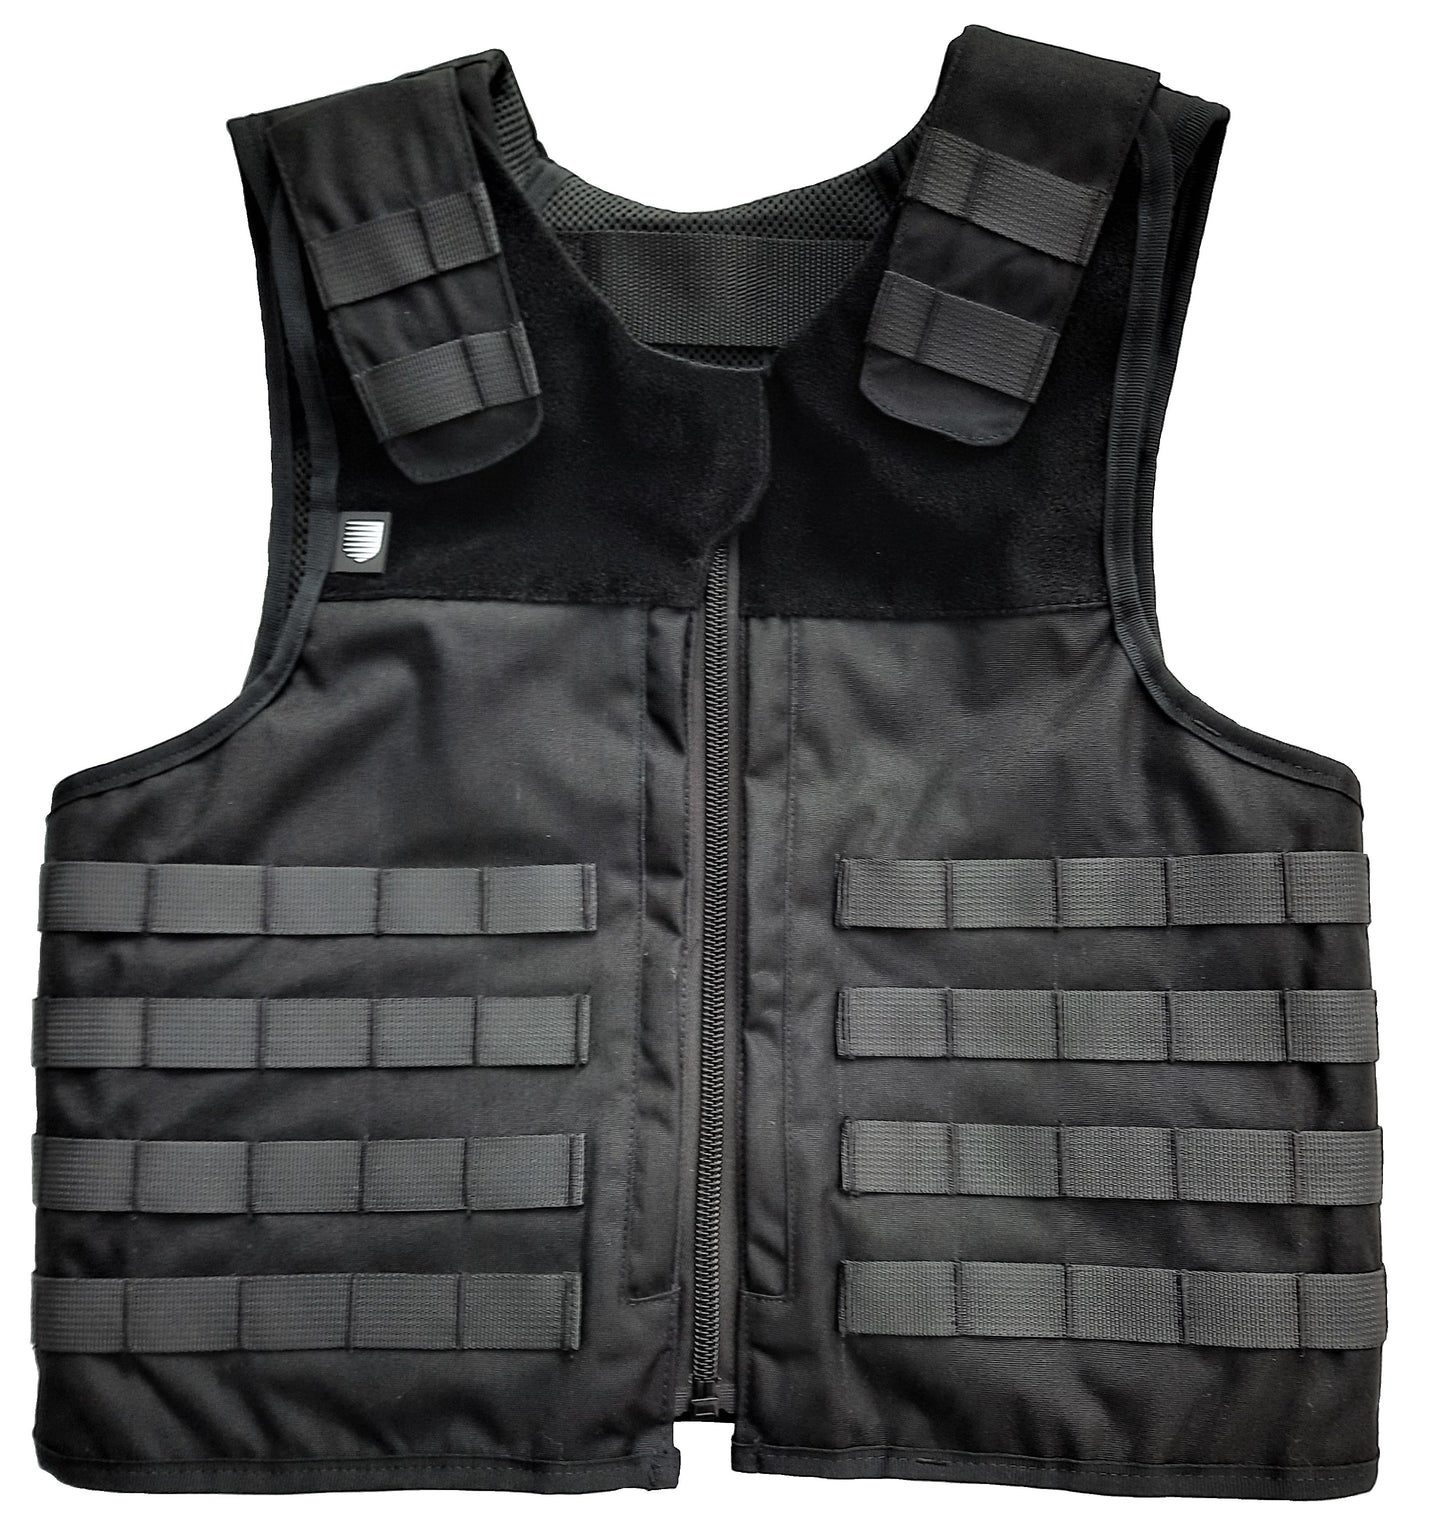 <tc>Heracles bulletproof Molle vest HG2-KR1-SP1 Sioen Ballistics body armor</tc>